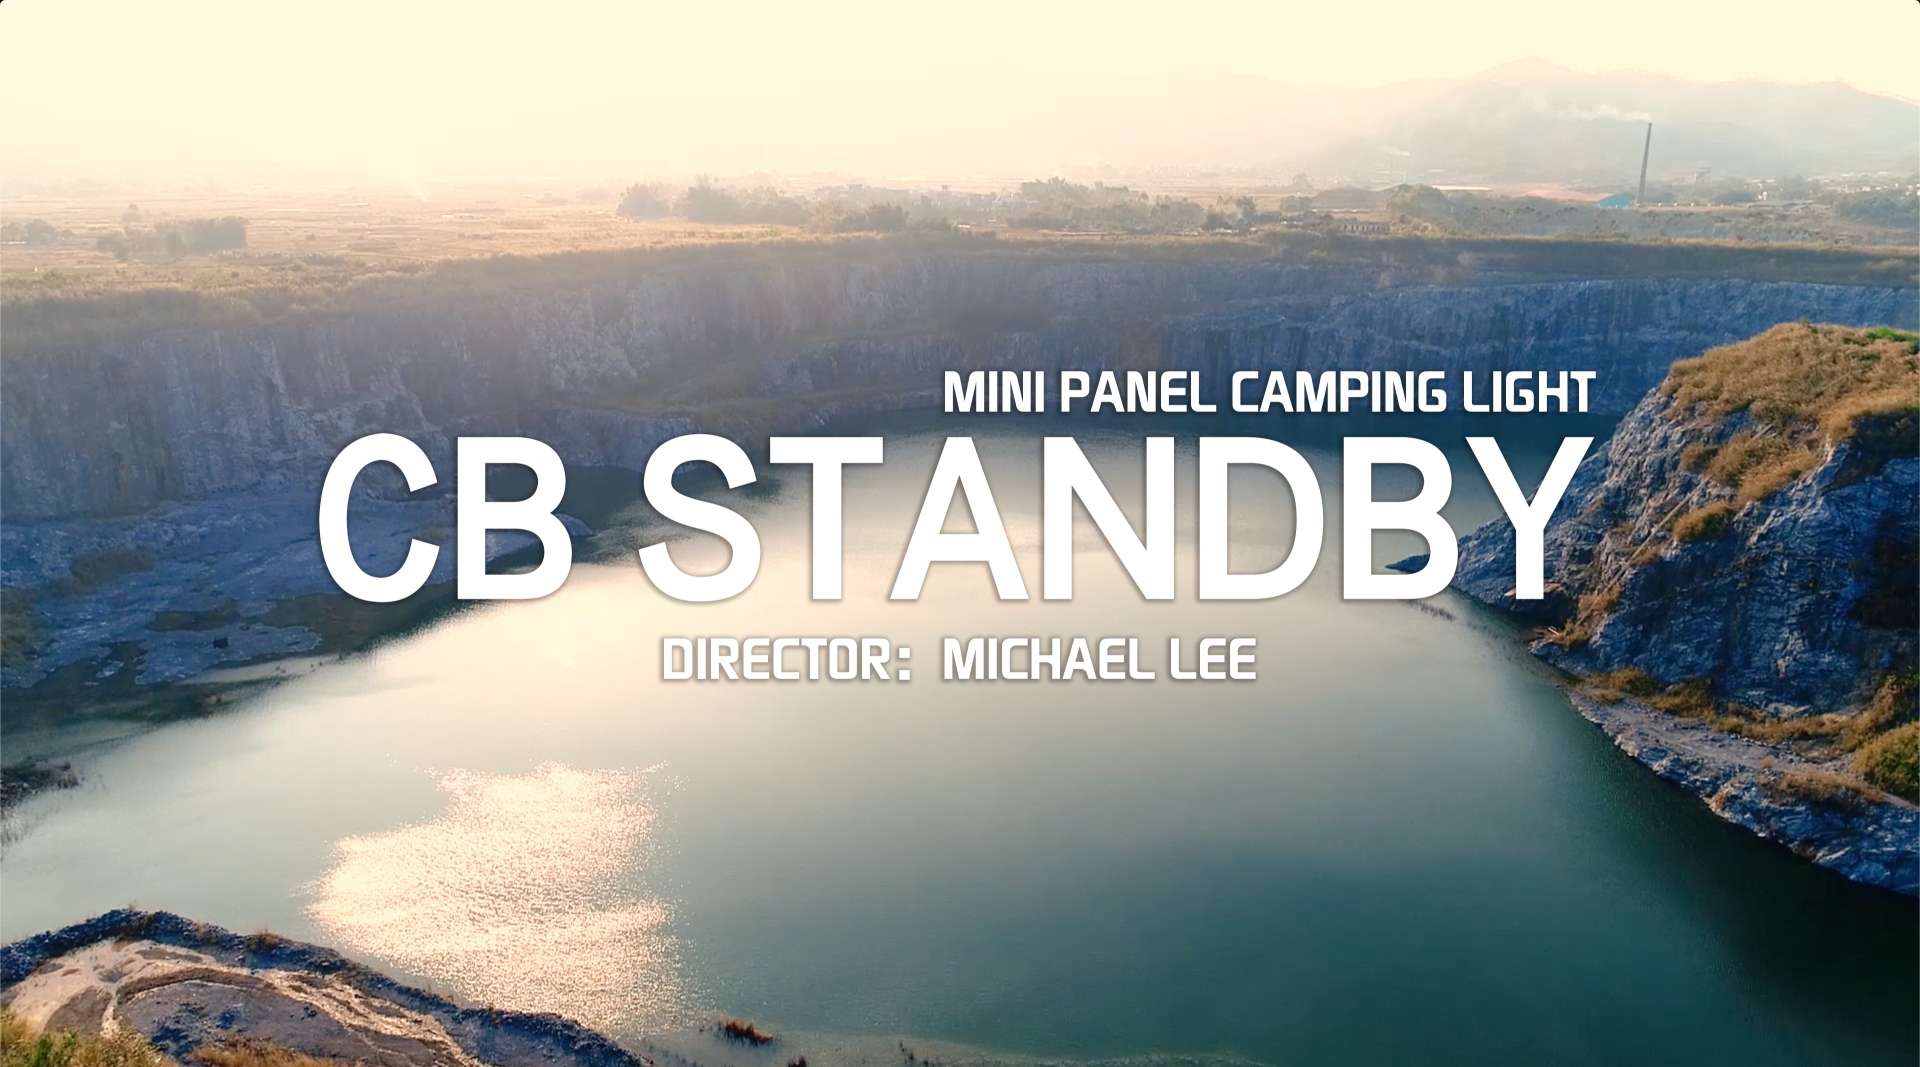 Mini panel camping light-CB STANDBY